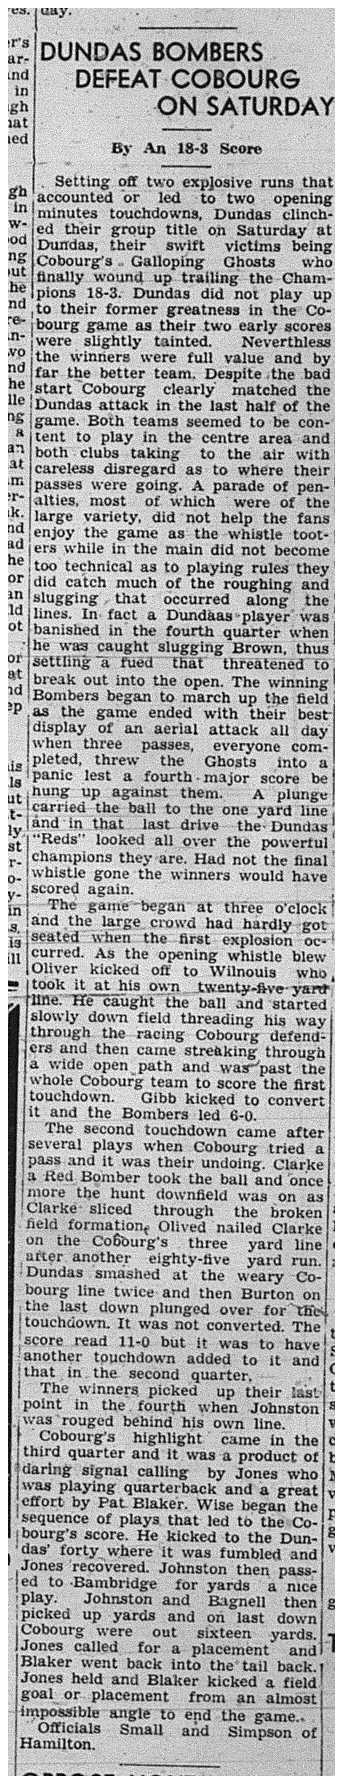 1939-11-09 Football -Galloping Ghosts fall to Dundas